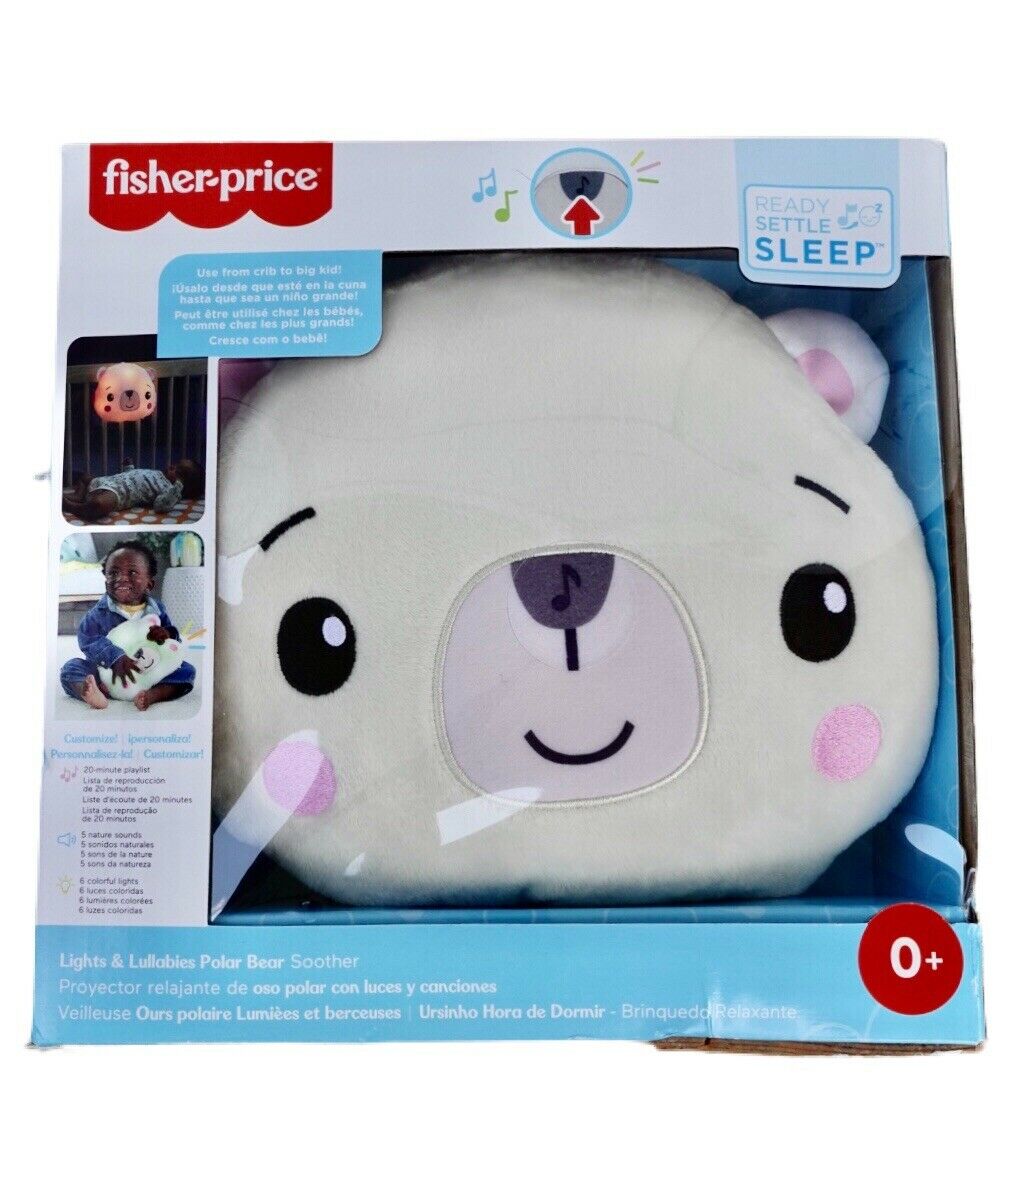 Fisher-price Lights & Lullabies Polar Bear Soother Crib Toy Light Up Sleep Baby